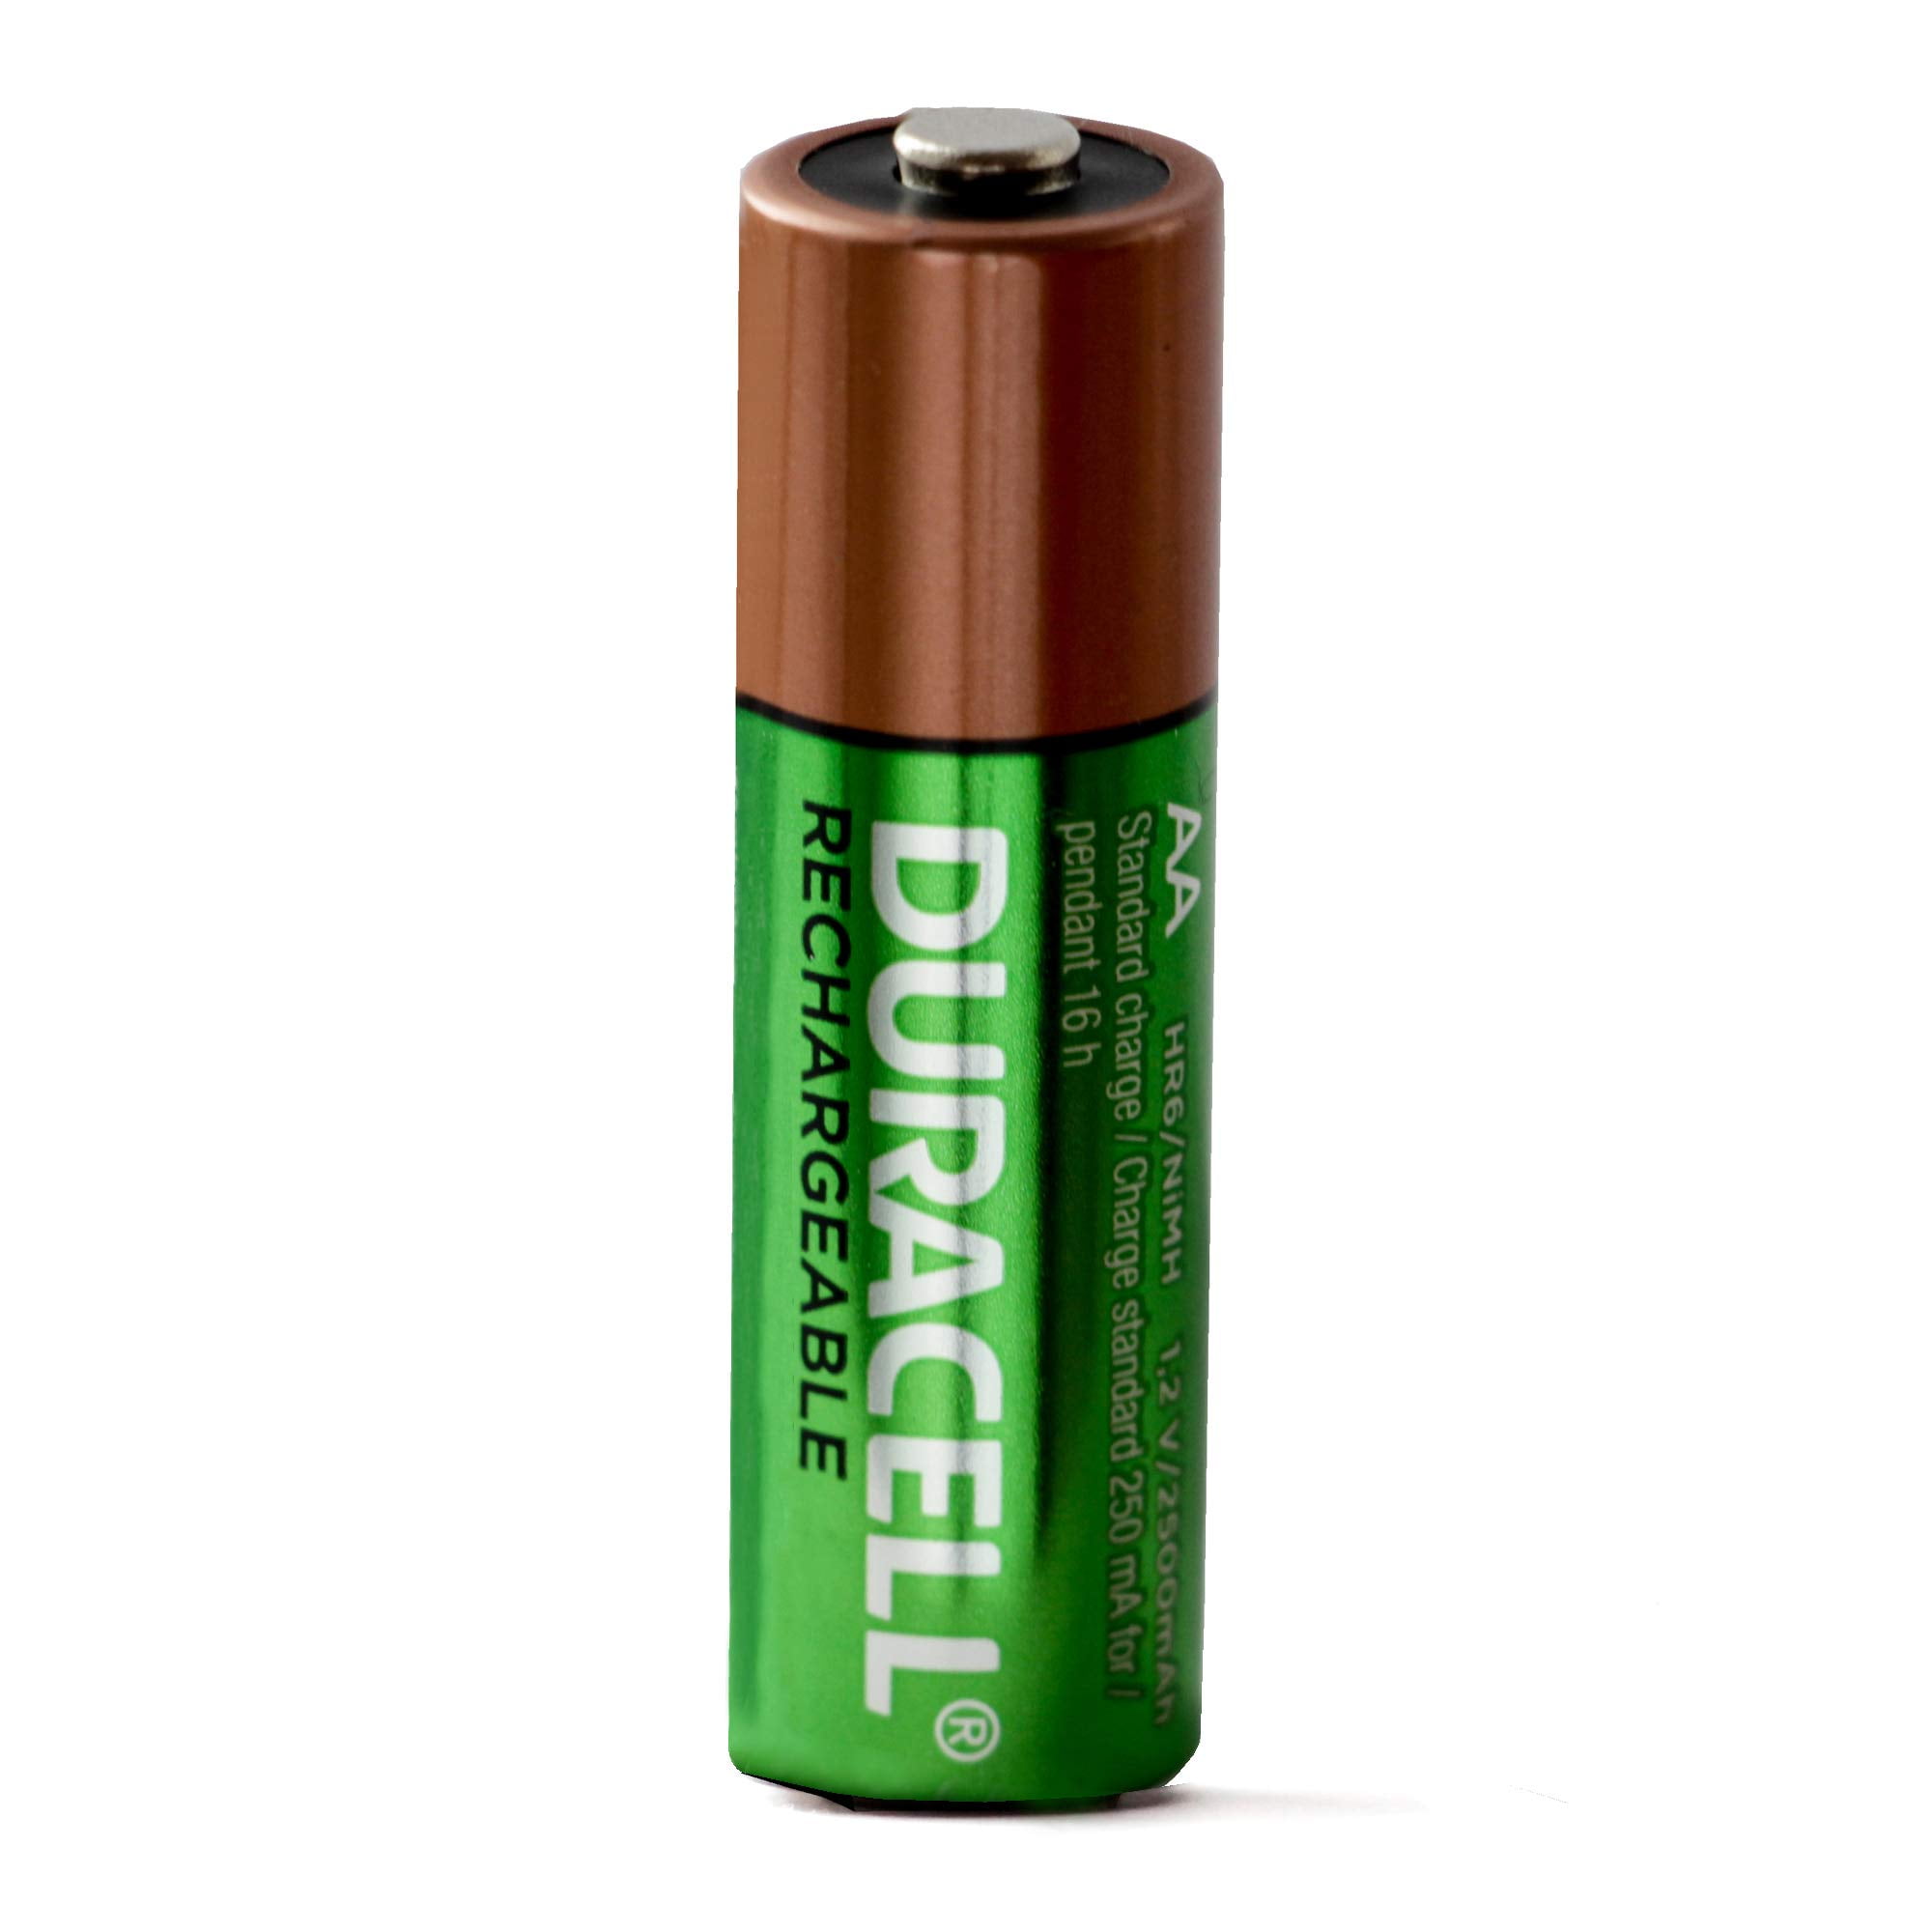 Duracell Piles rechargeables AA 1300mAh, paquet de 4